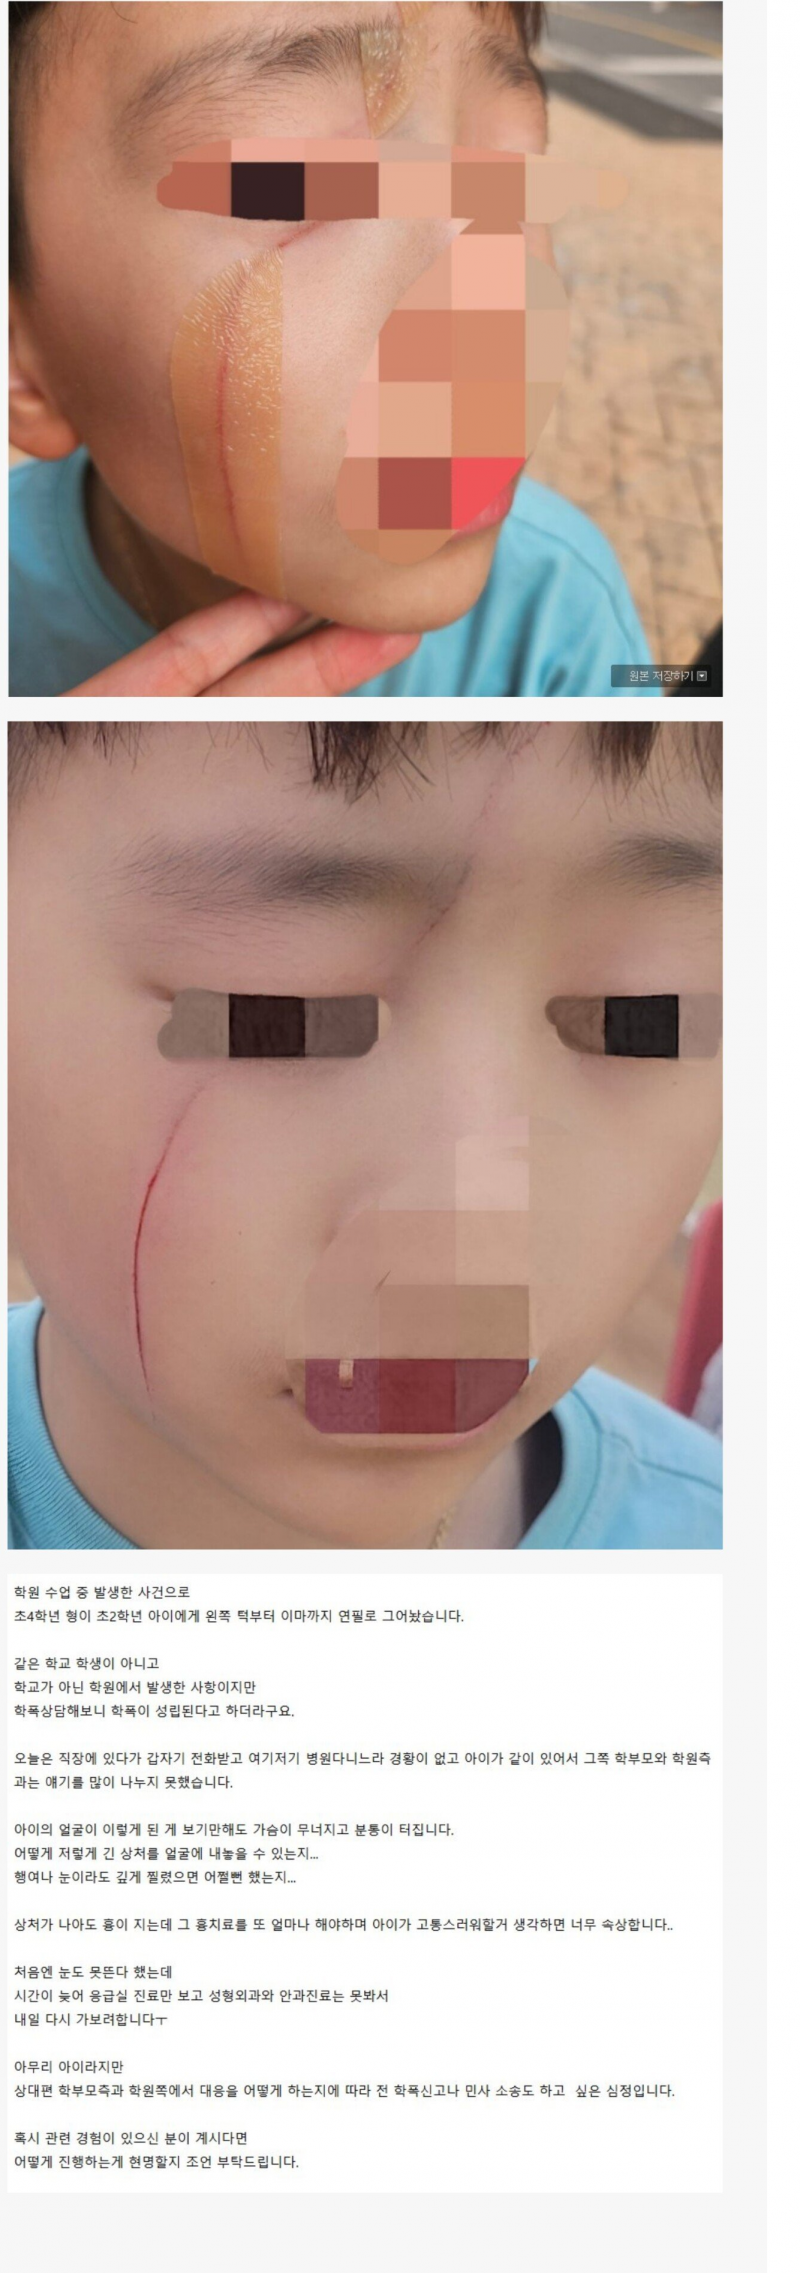 nokbeon.net-혐)초딩 4학년이 연필로 얼굴 그어놓음.jpg-1번 이미지